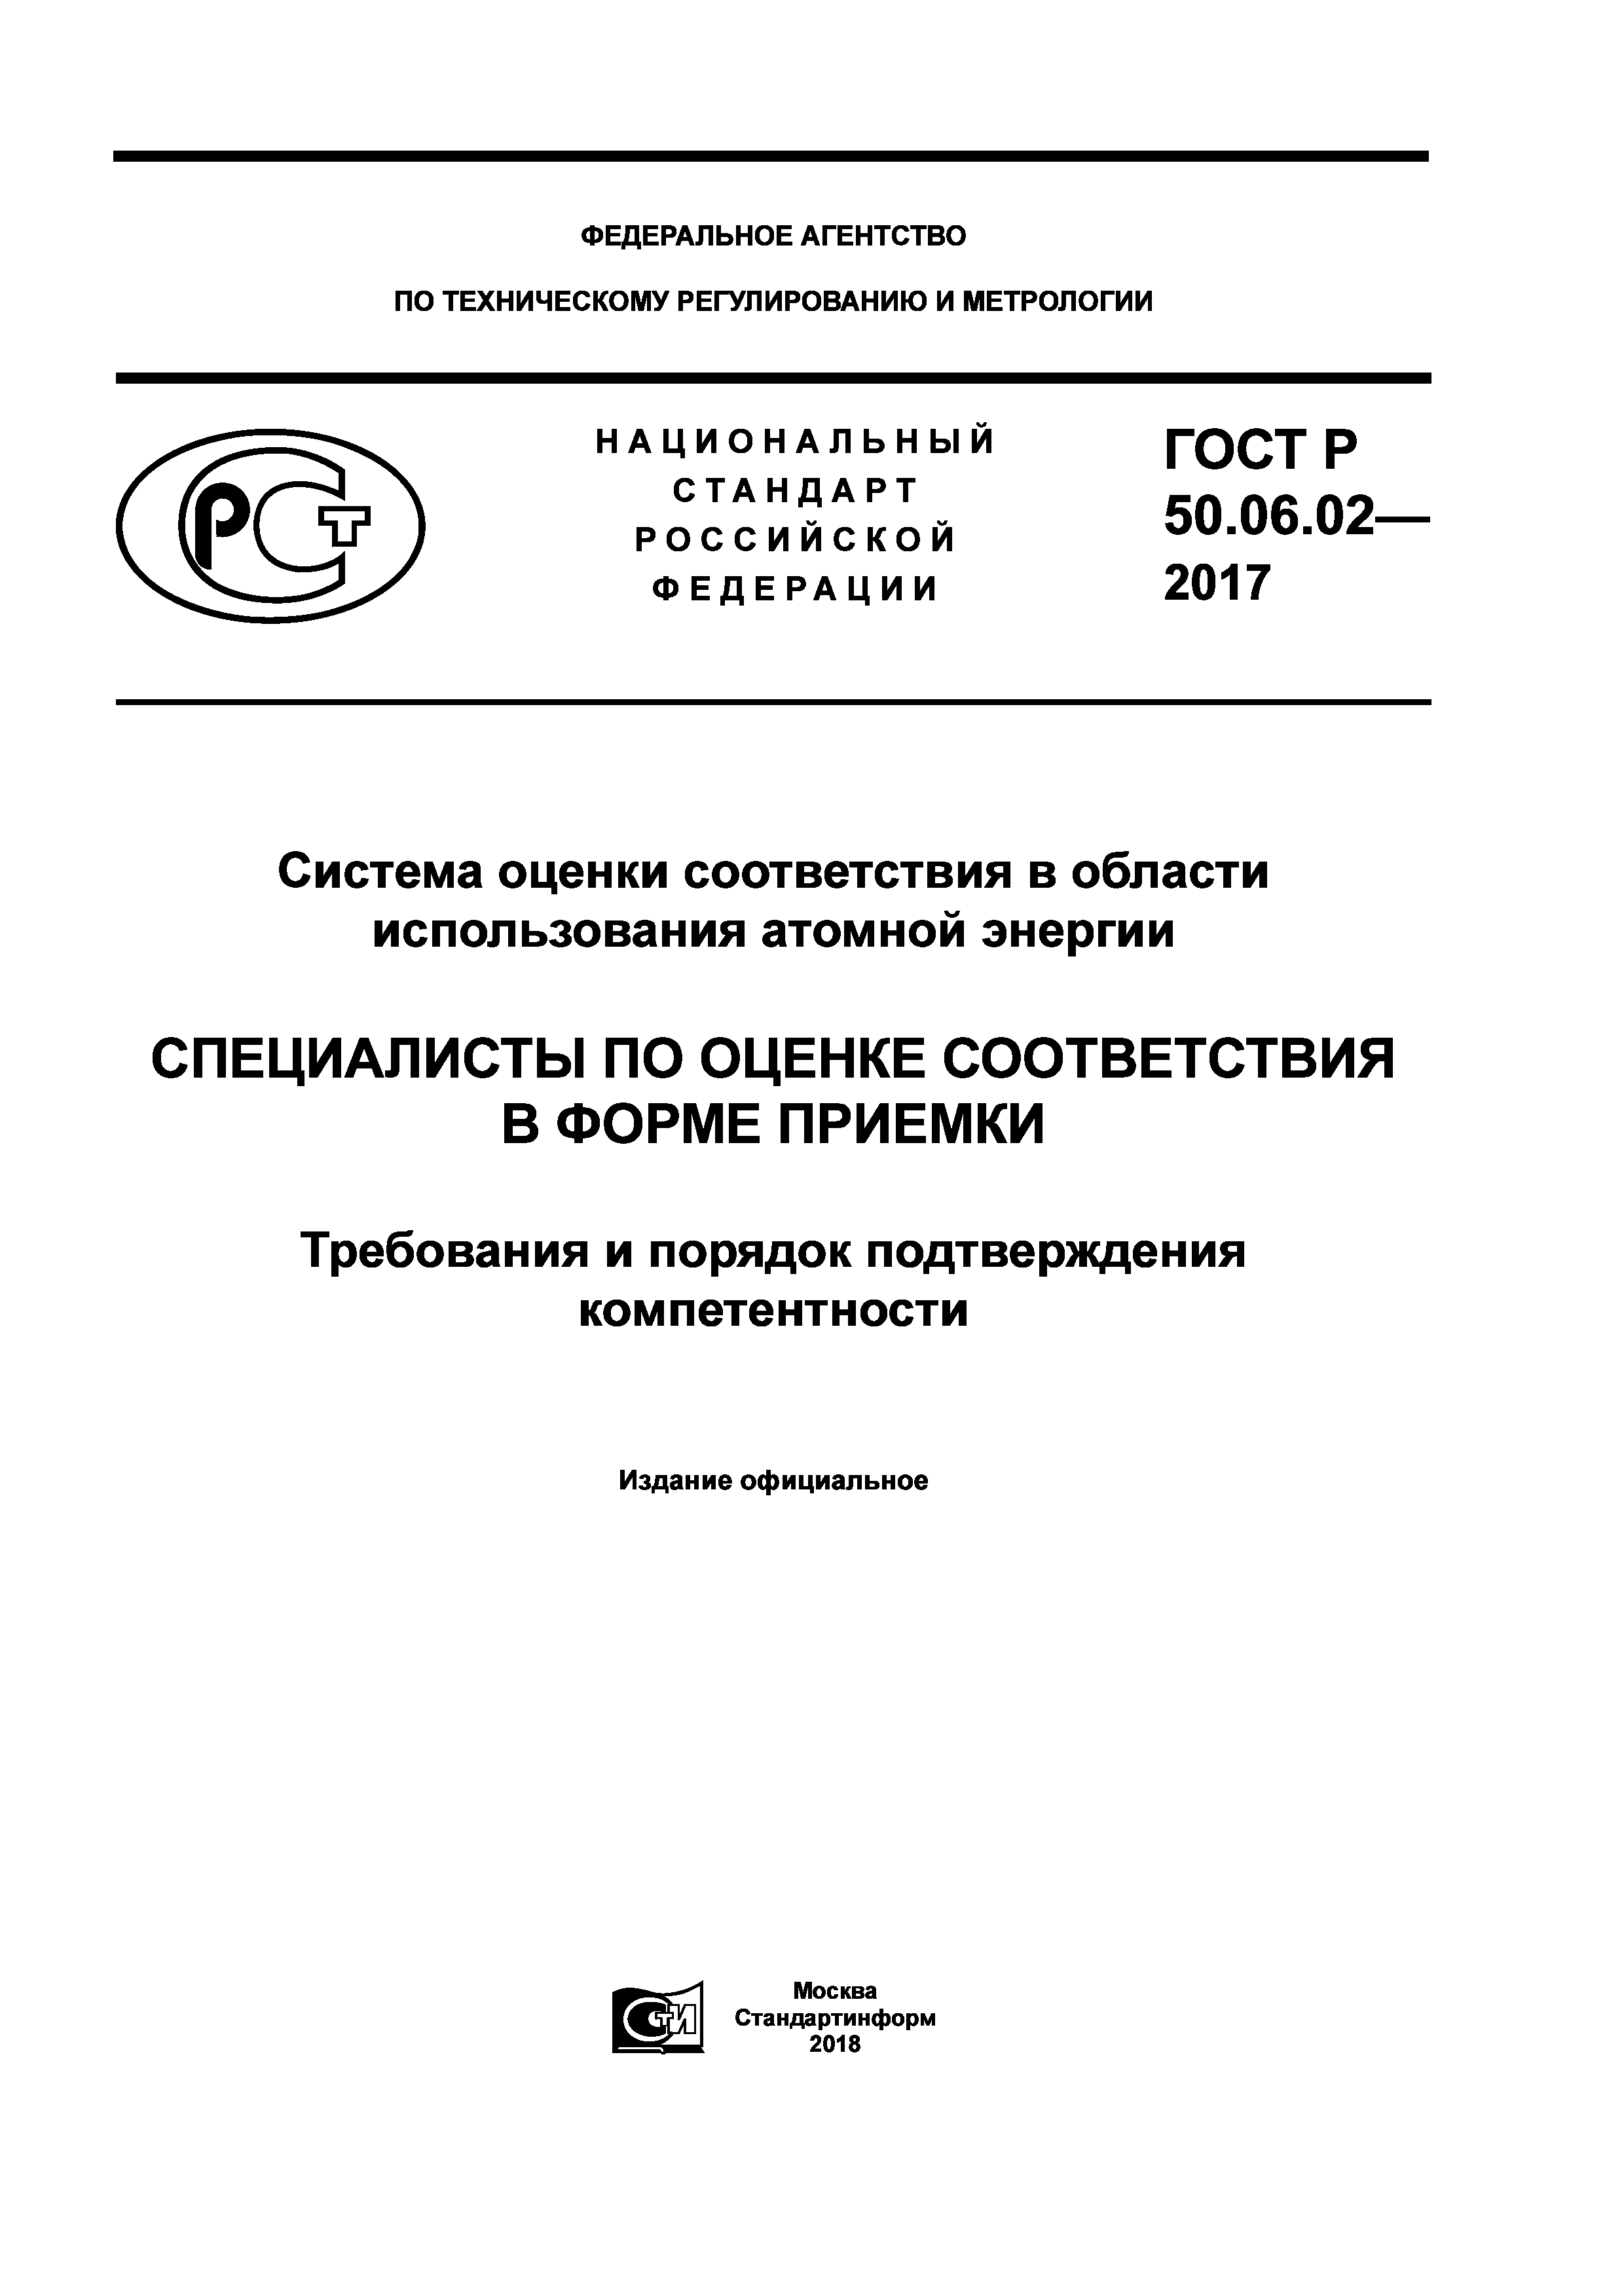 ГОСТ Р 50.06.02-2017